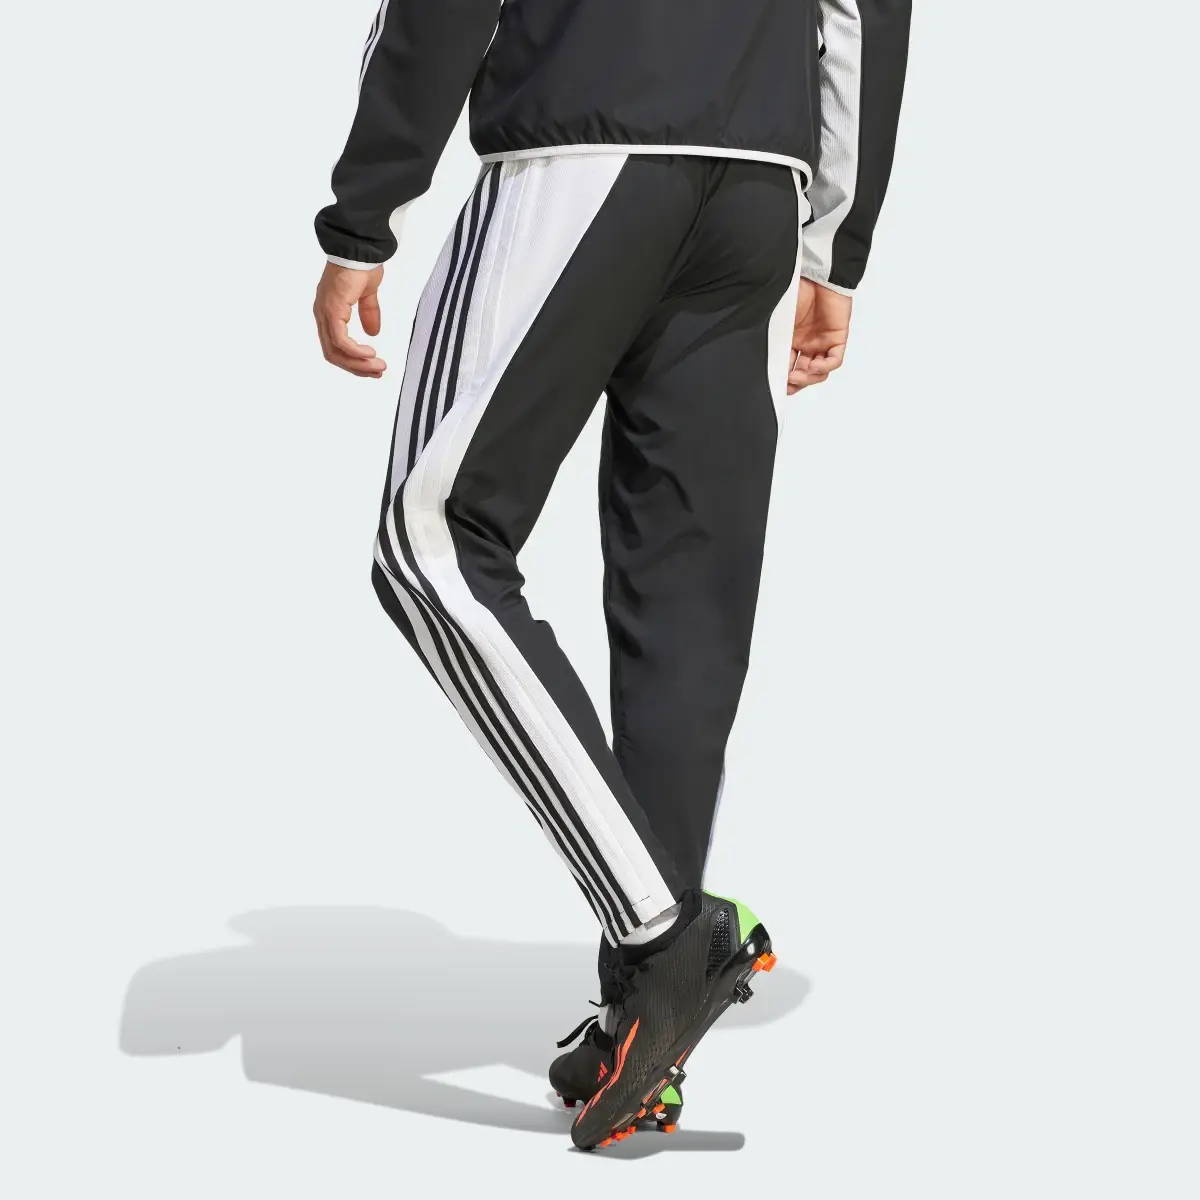 In motion.# Adidas Tiro pants are essential this season.